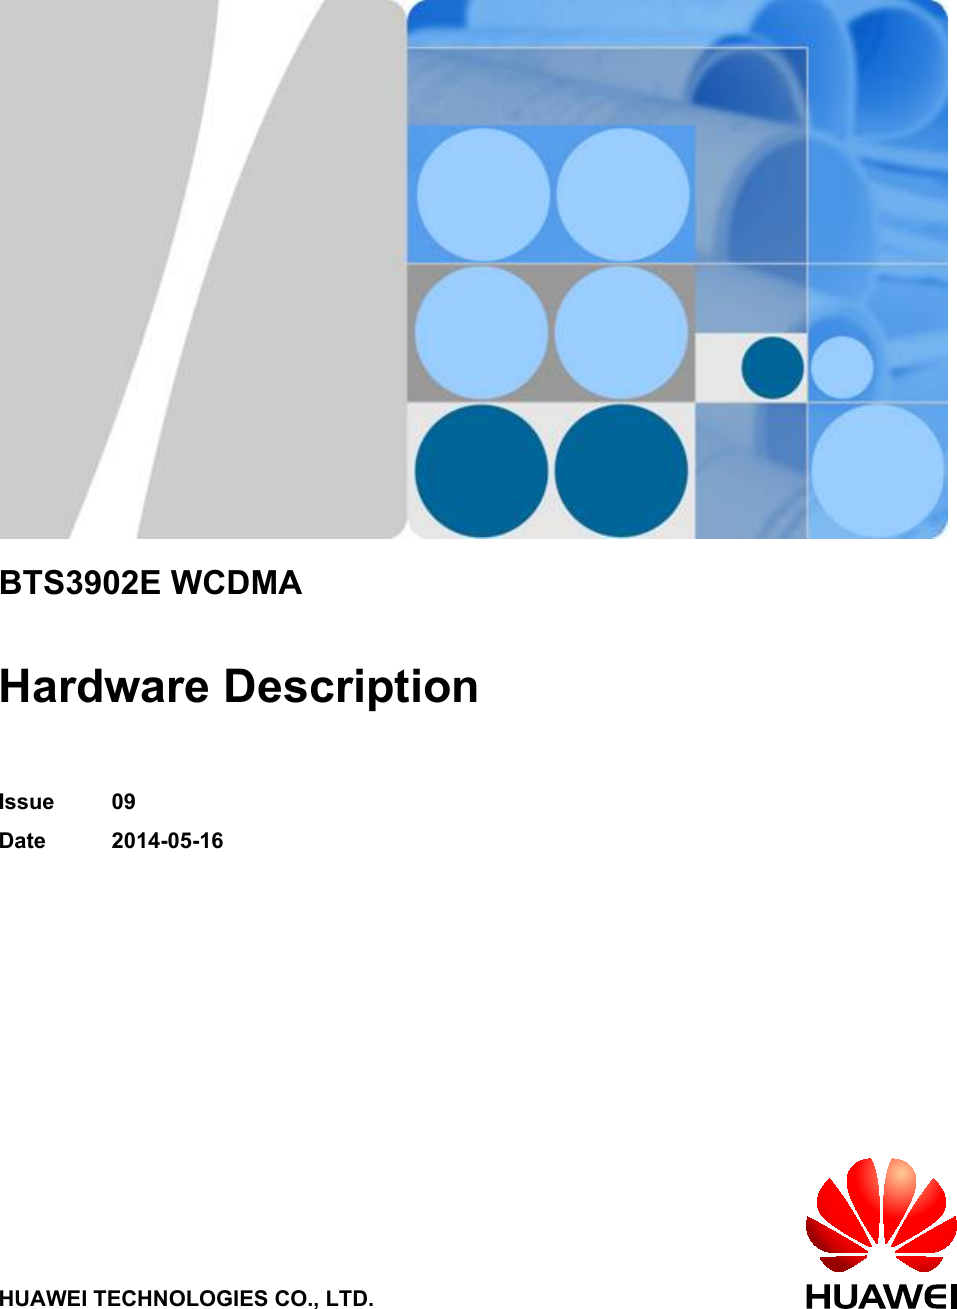 BTS3902E WCDMAHardware DescriptionIssue 09Date 2014-05-16HUAWEI TECHNOLOGIES CO., LTD.